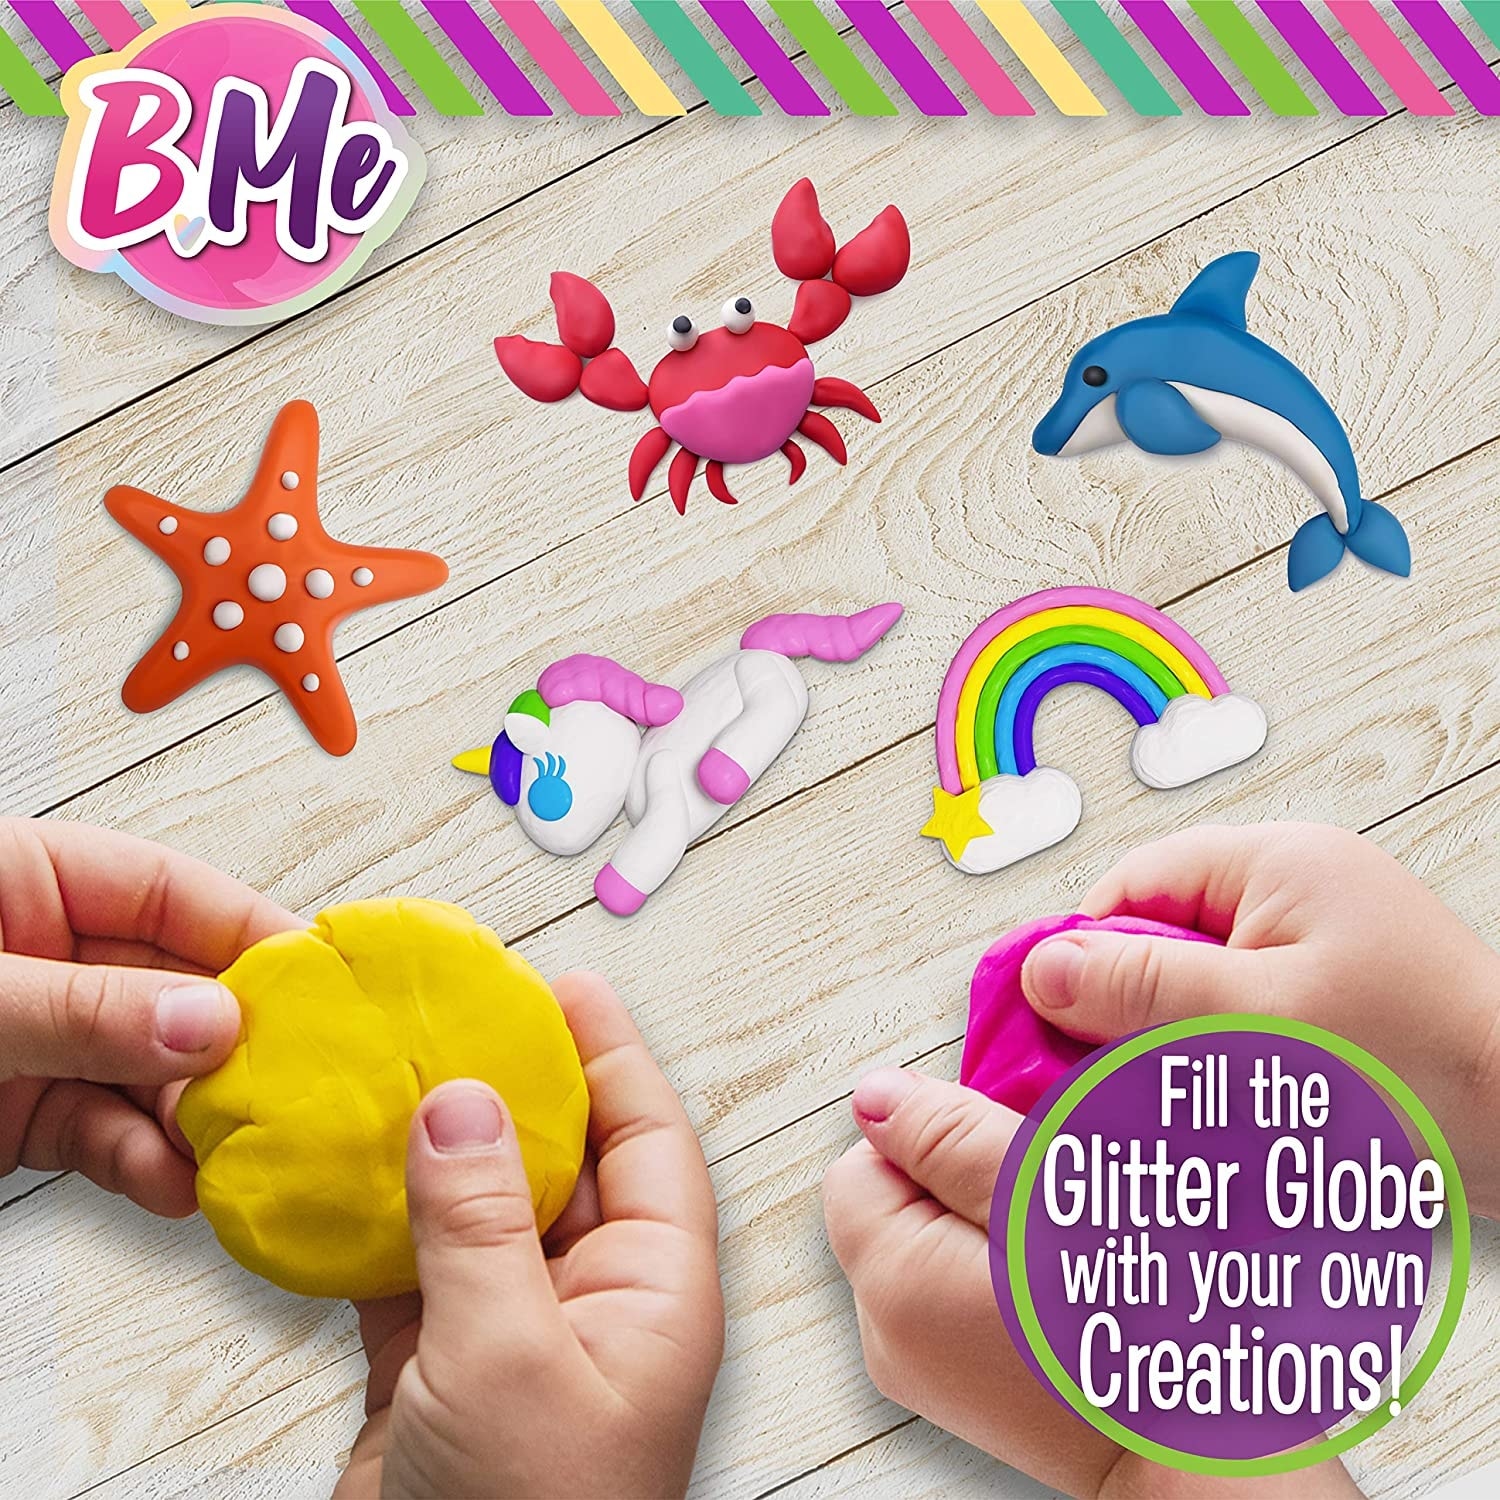 Creative Kids Paint Your Own Unicorn Craft Kit - Ceramic Unicorn Snow Globe  – Ages 6+